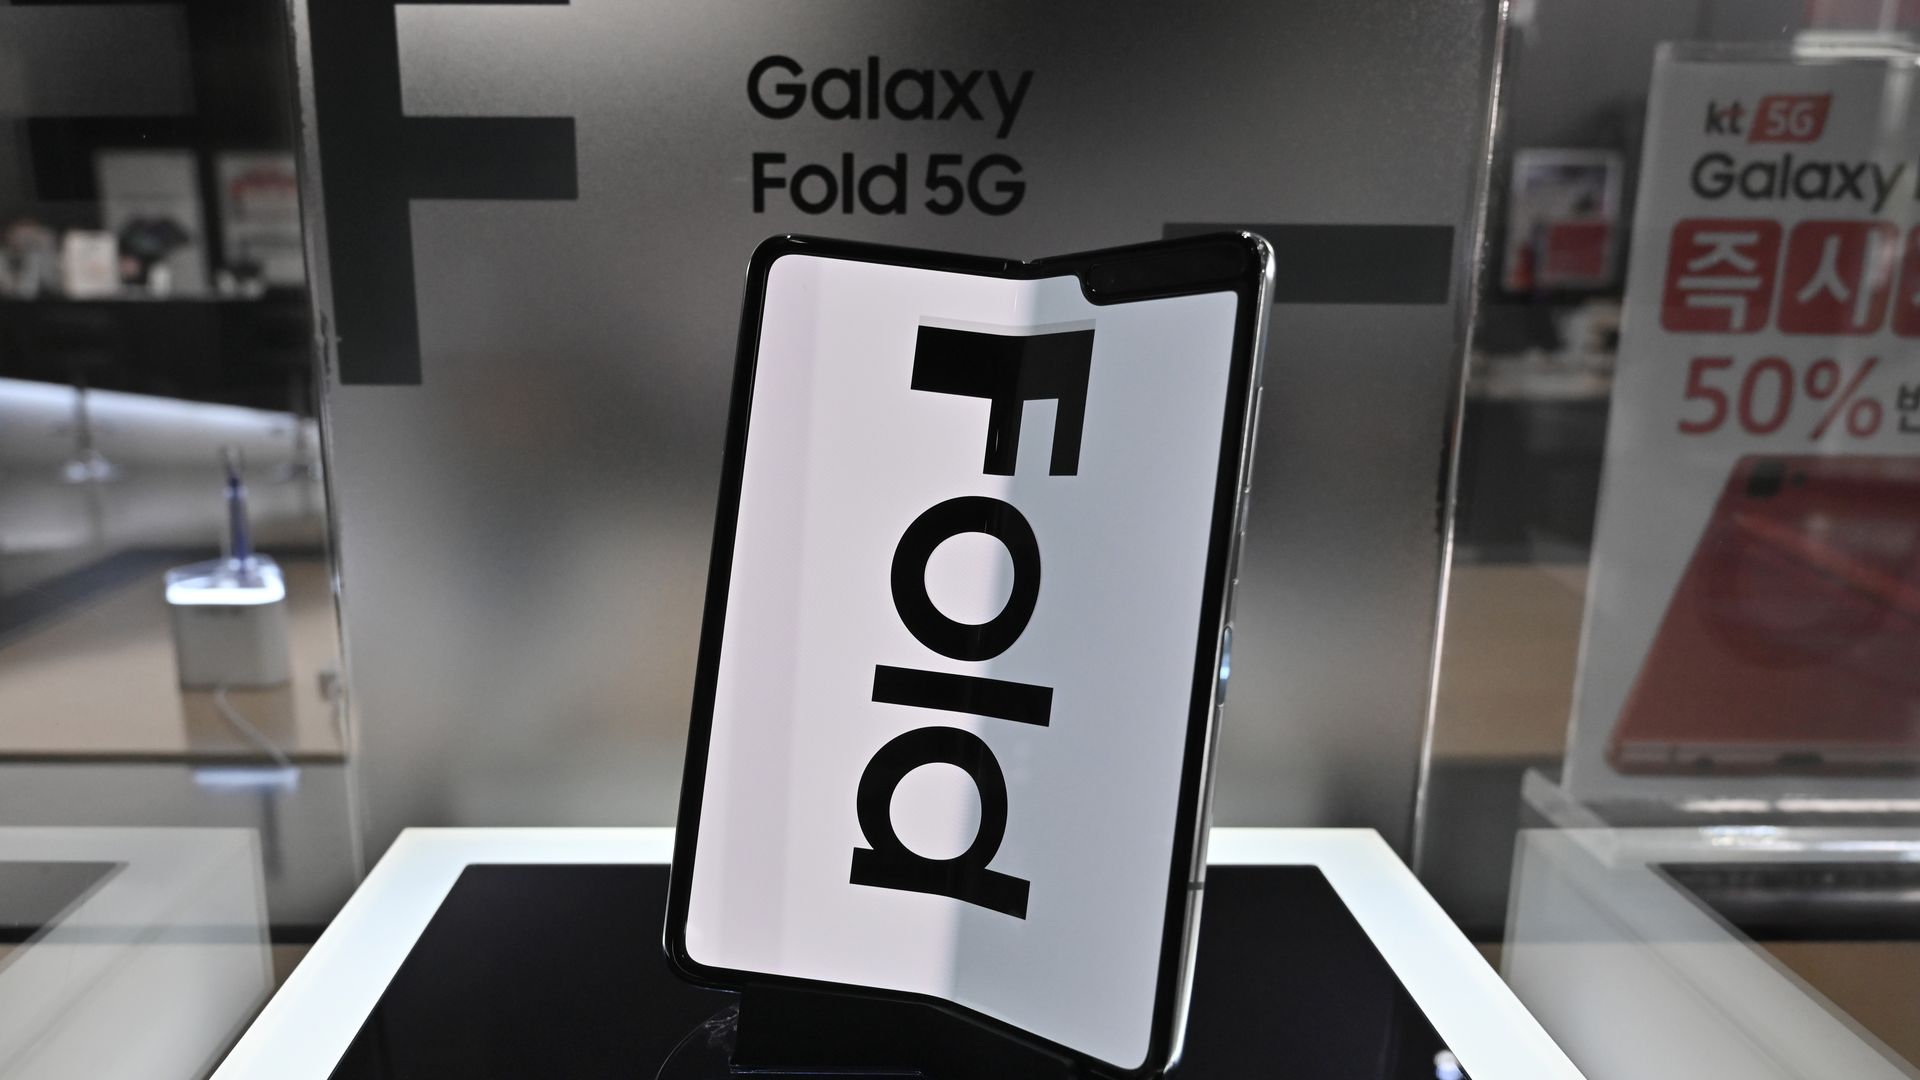 The Samsung Galaxy Fold